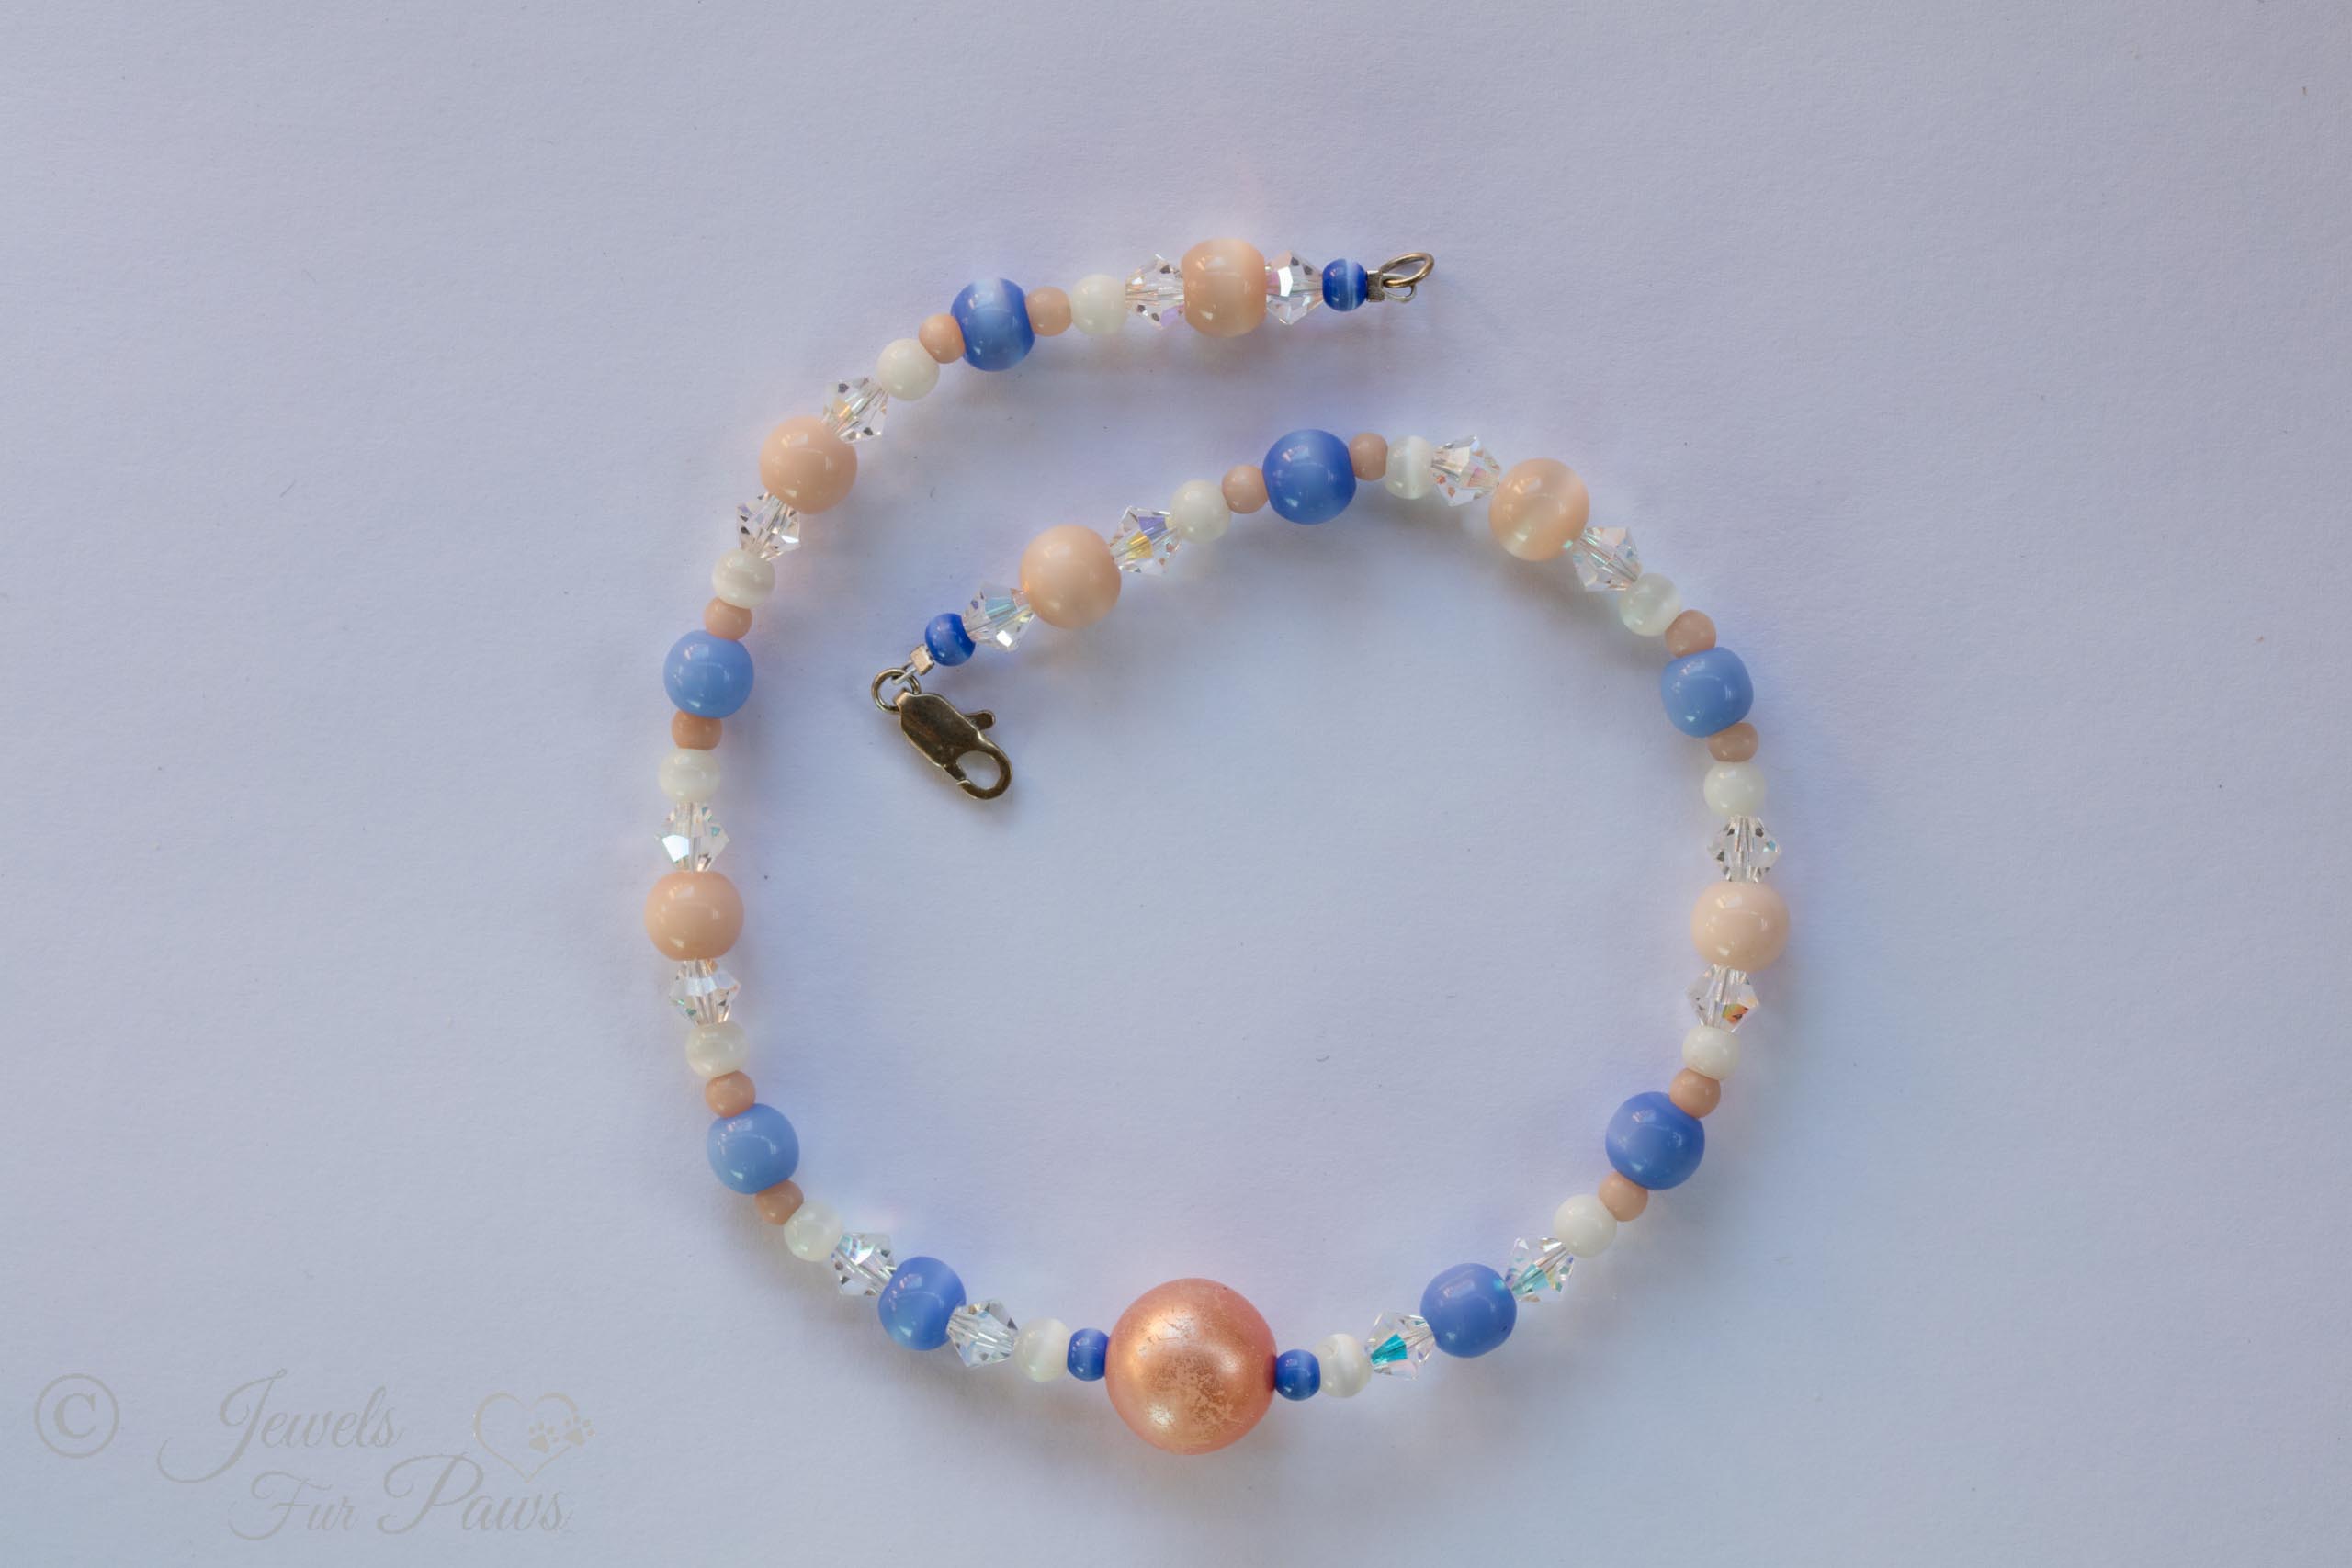 cat dog pet necklace large salmon orange bead with cats eye blue and white beads on white background